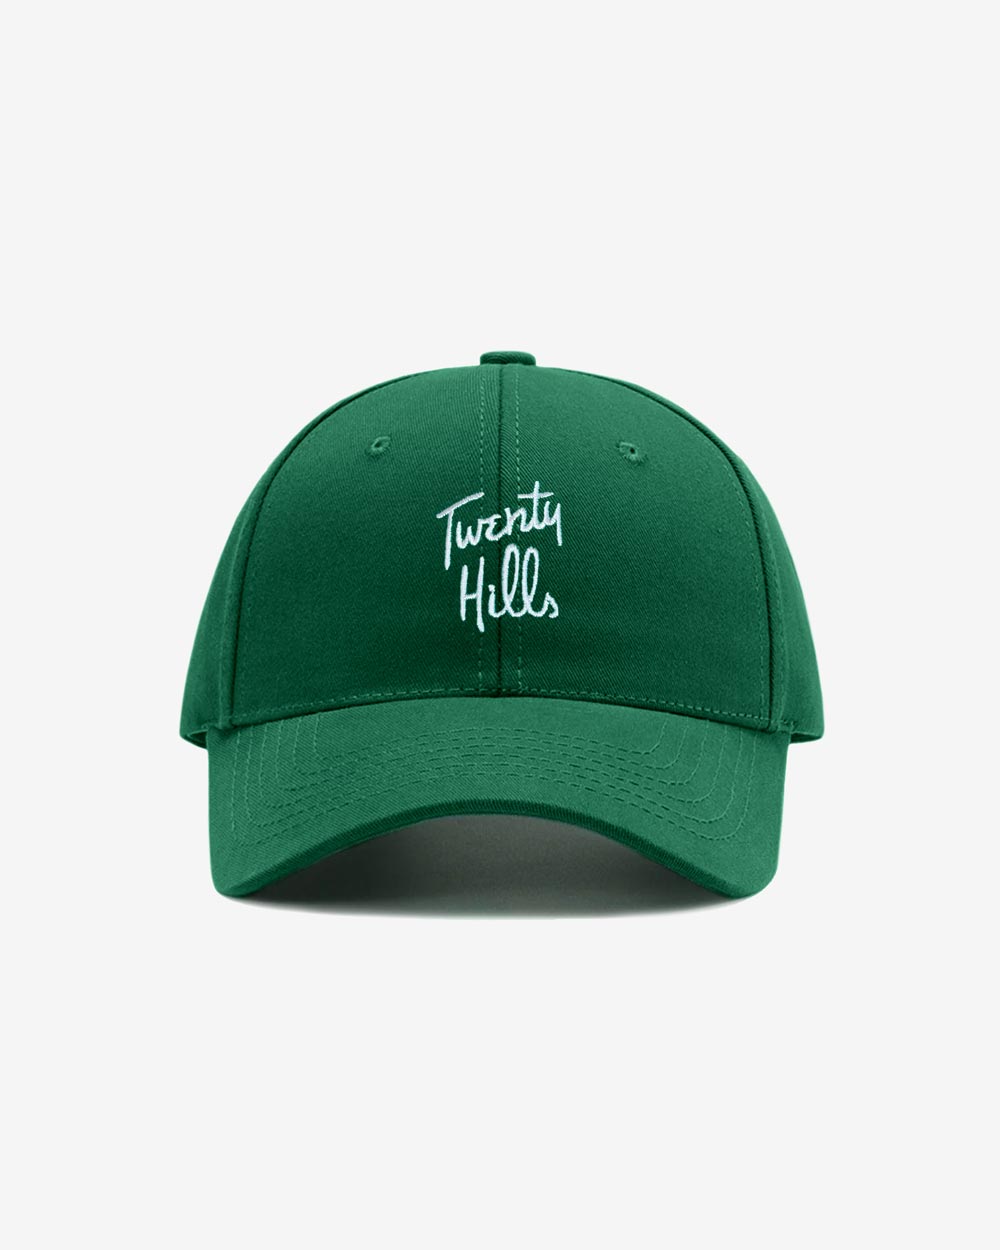 Twenty Hills Cap (Pine Green)